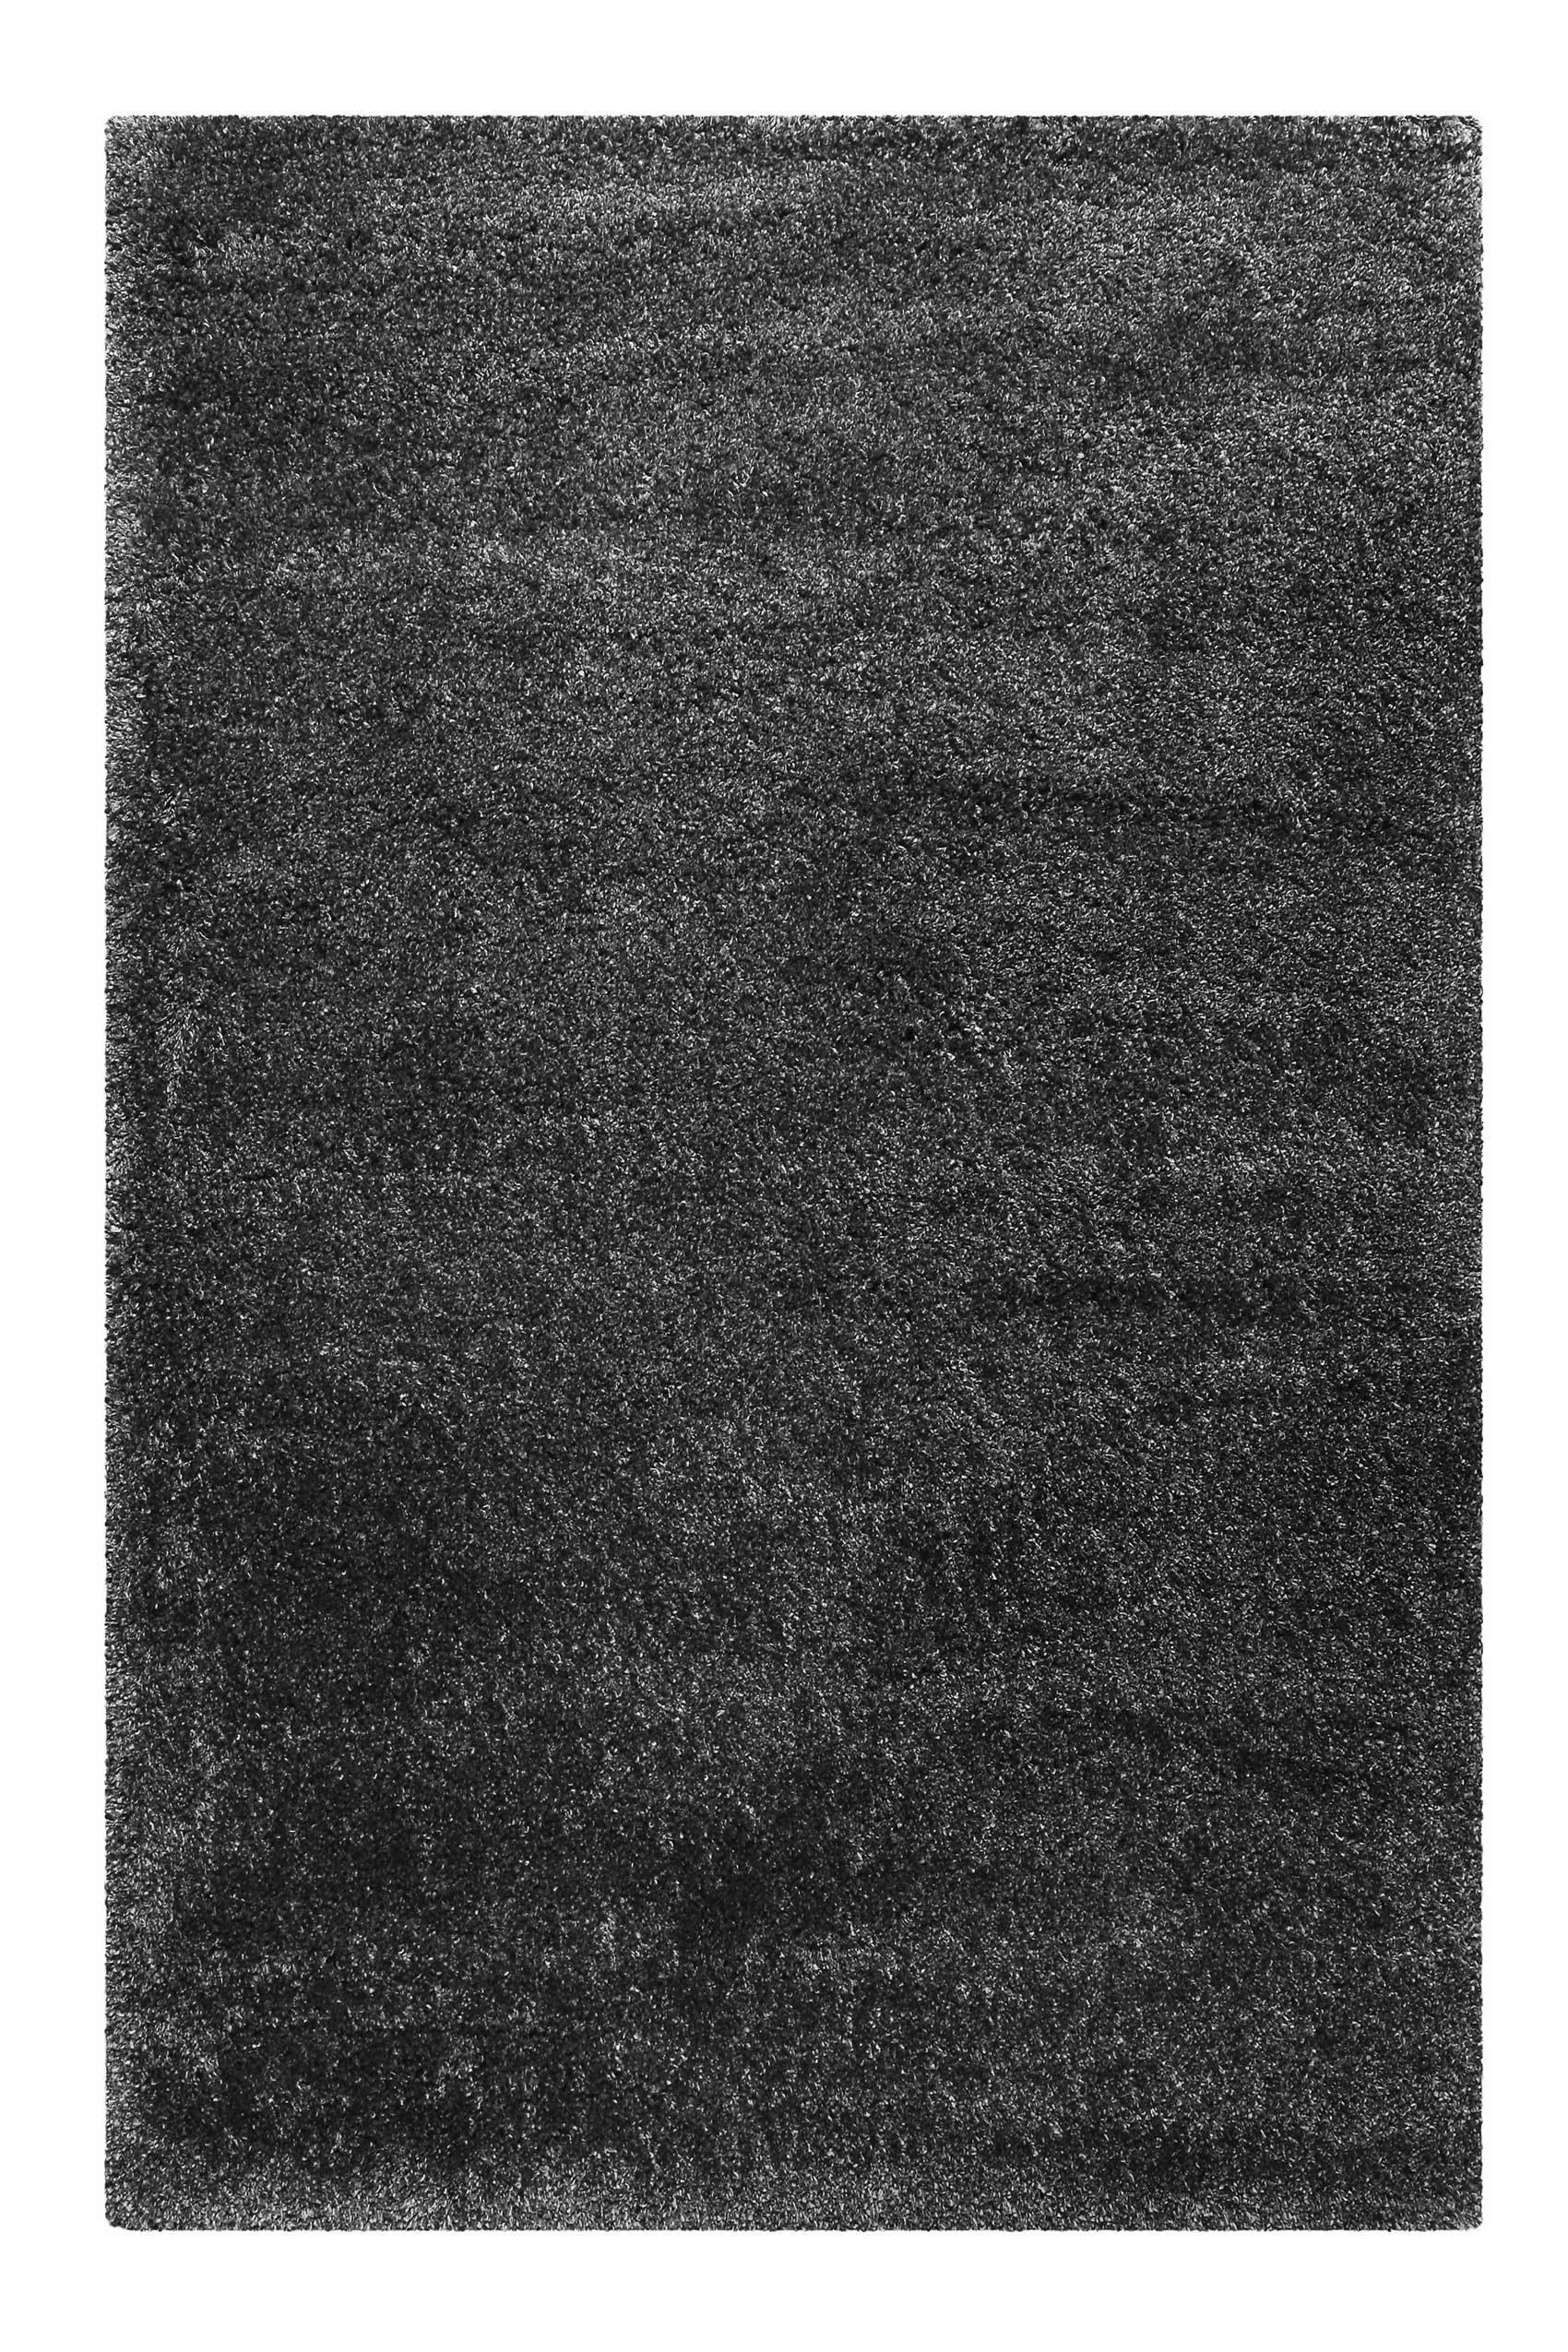 HOCHFLORTEPPICH 120/170 cm Paula  - Grau, Design, Textil (120/170cm) - Novel